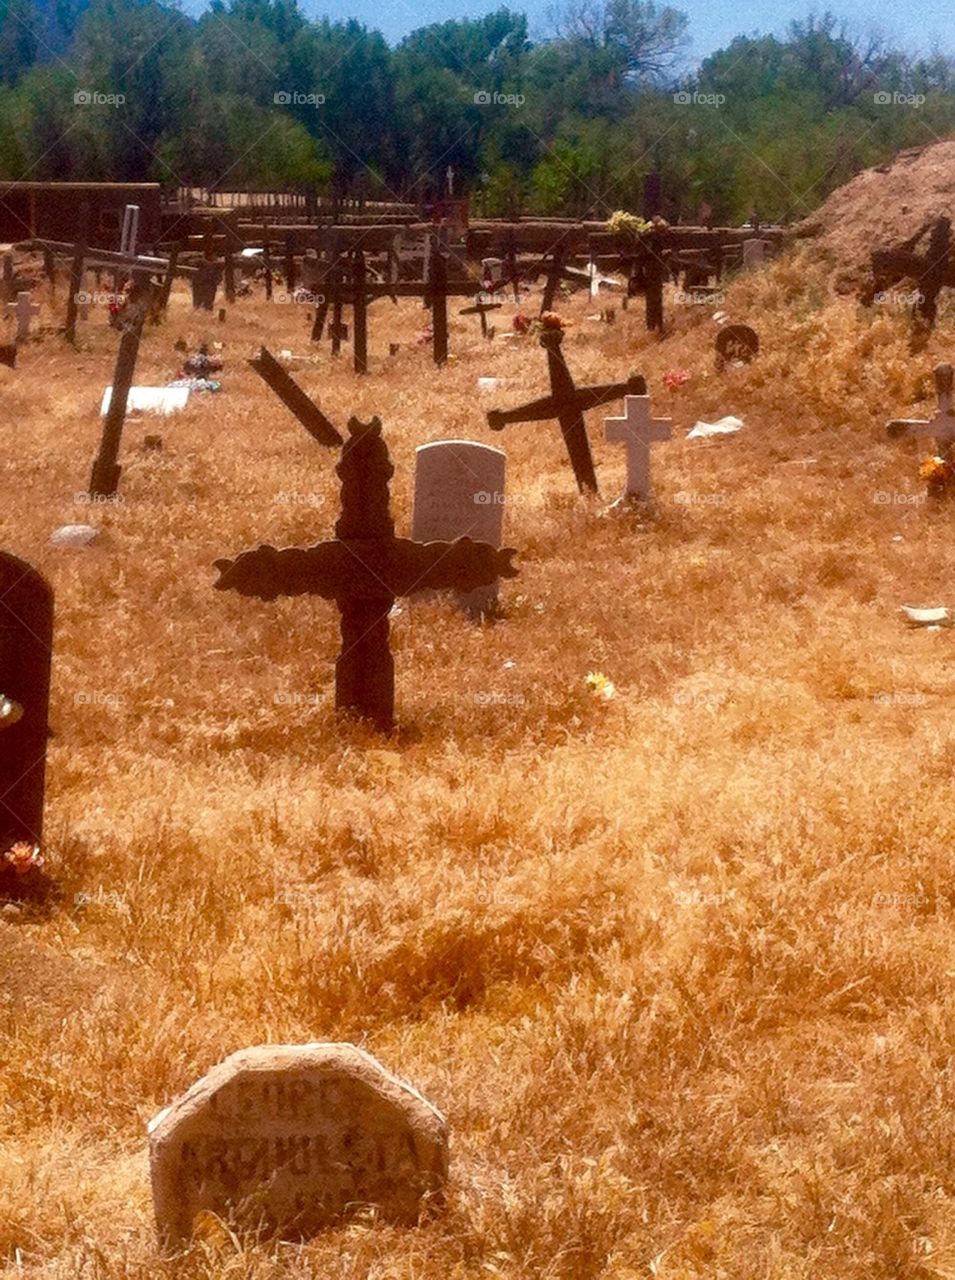 Burial Ground